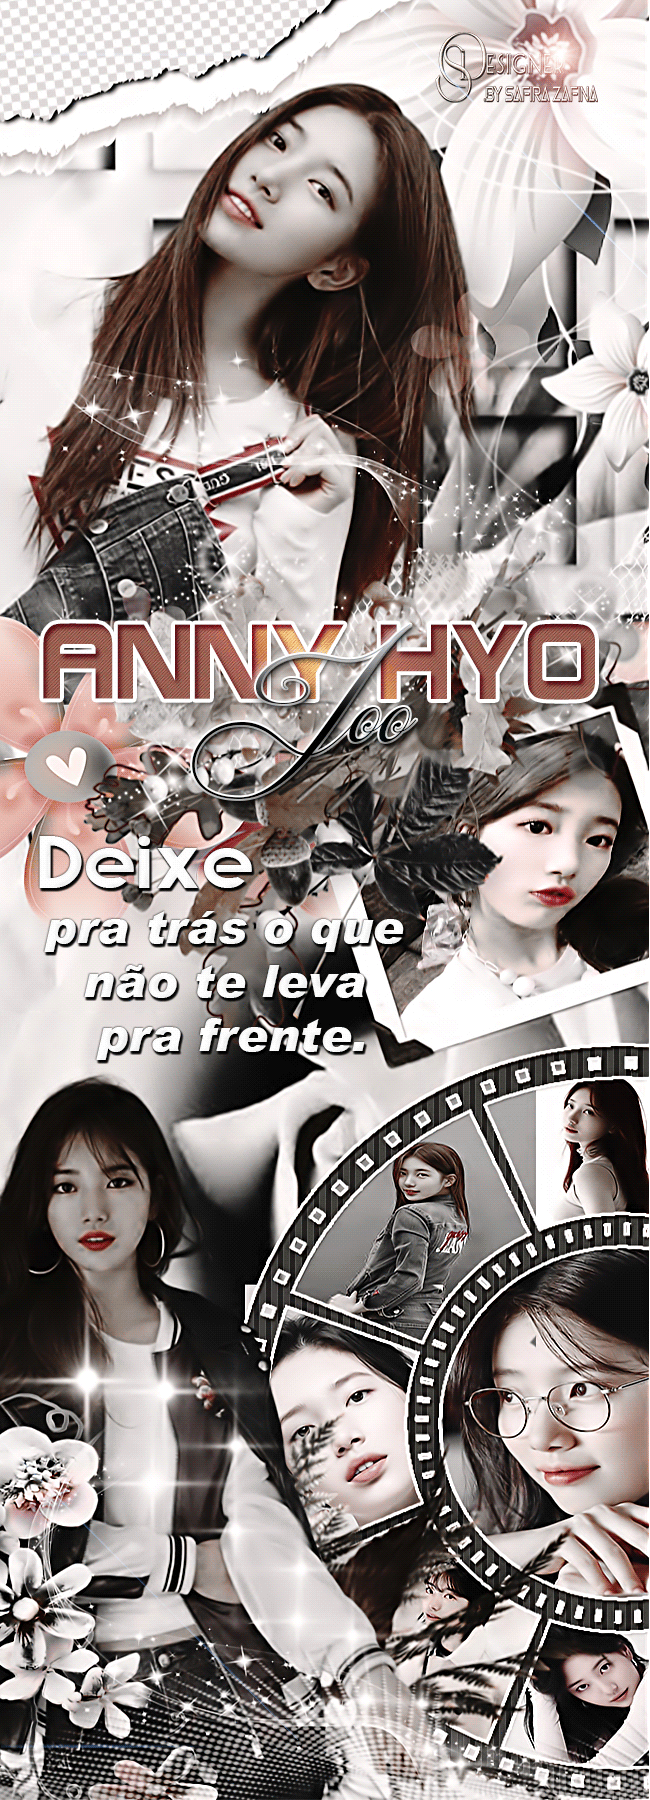 Anny-Hyo%2528KITPERFIL-ABOUTSD%2529_bysa